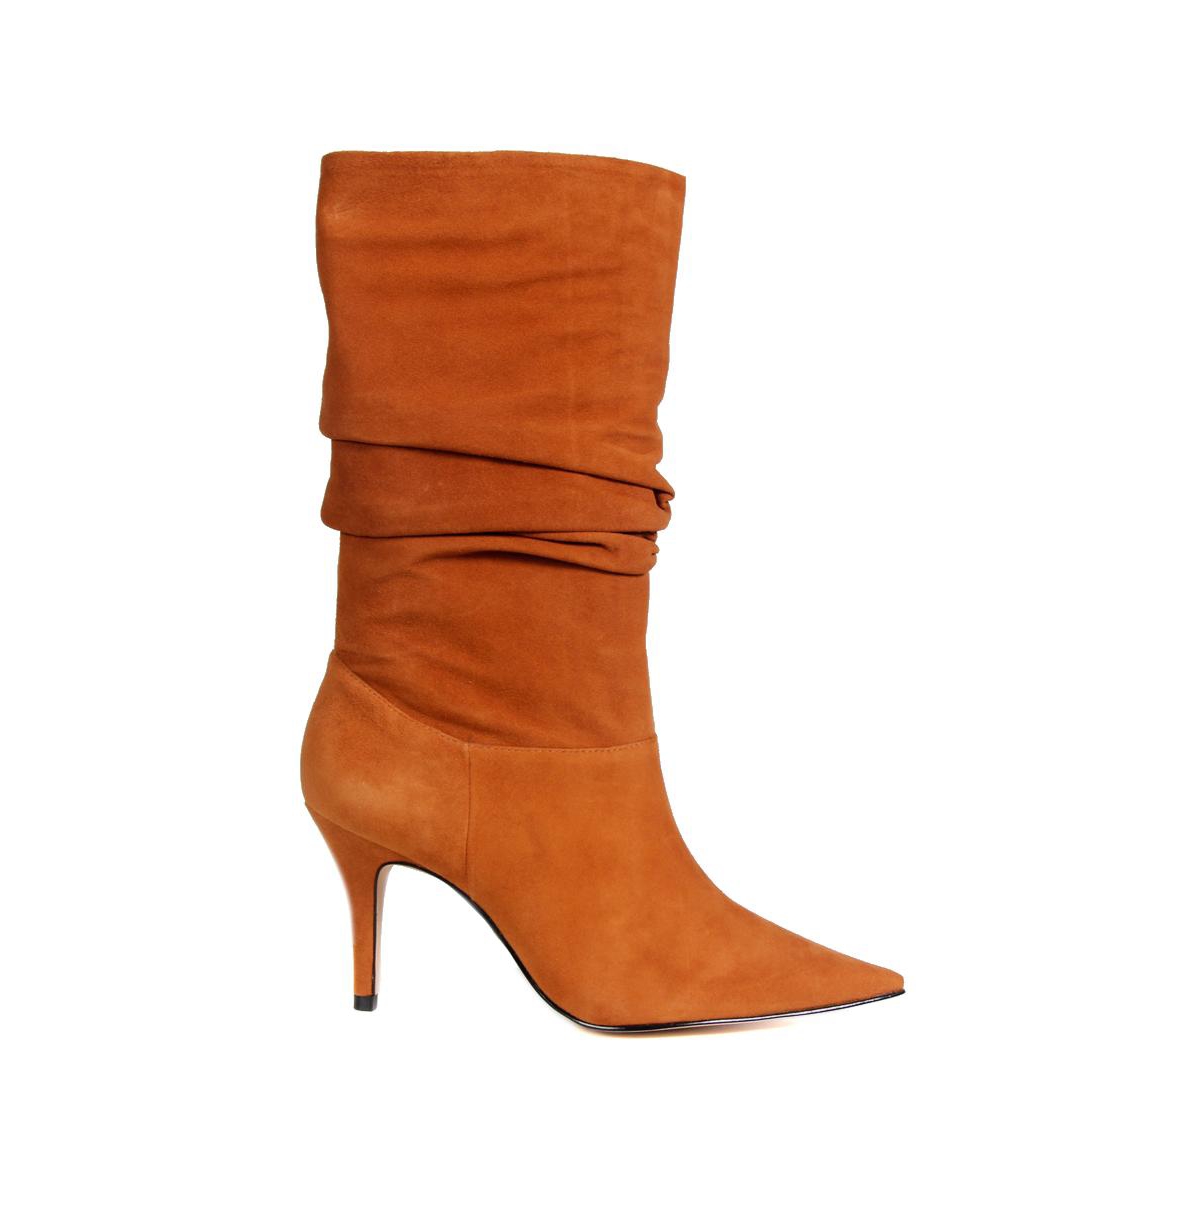 Shoes Women's Carmel Pointed-Toe Dress Boots - Caramel